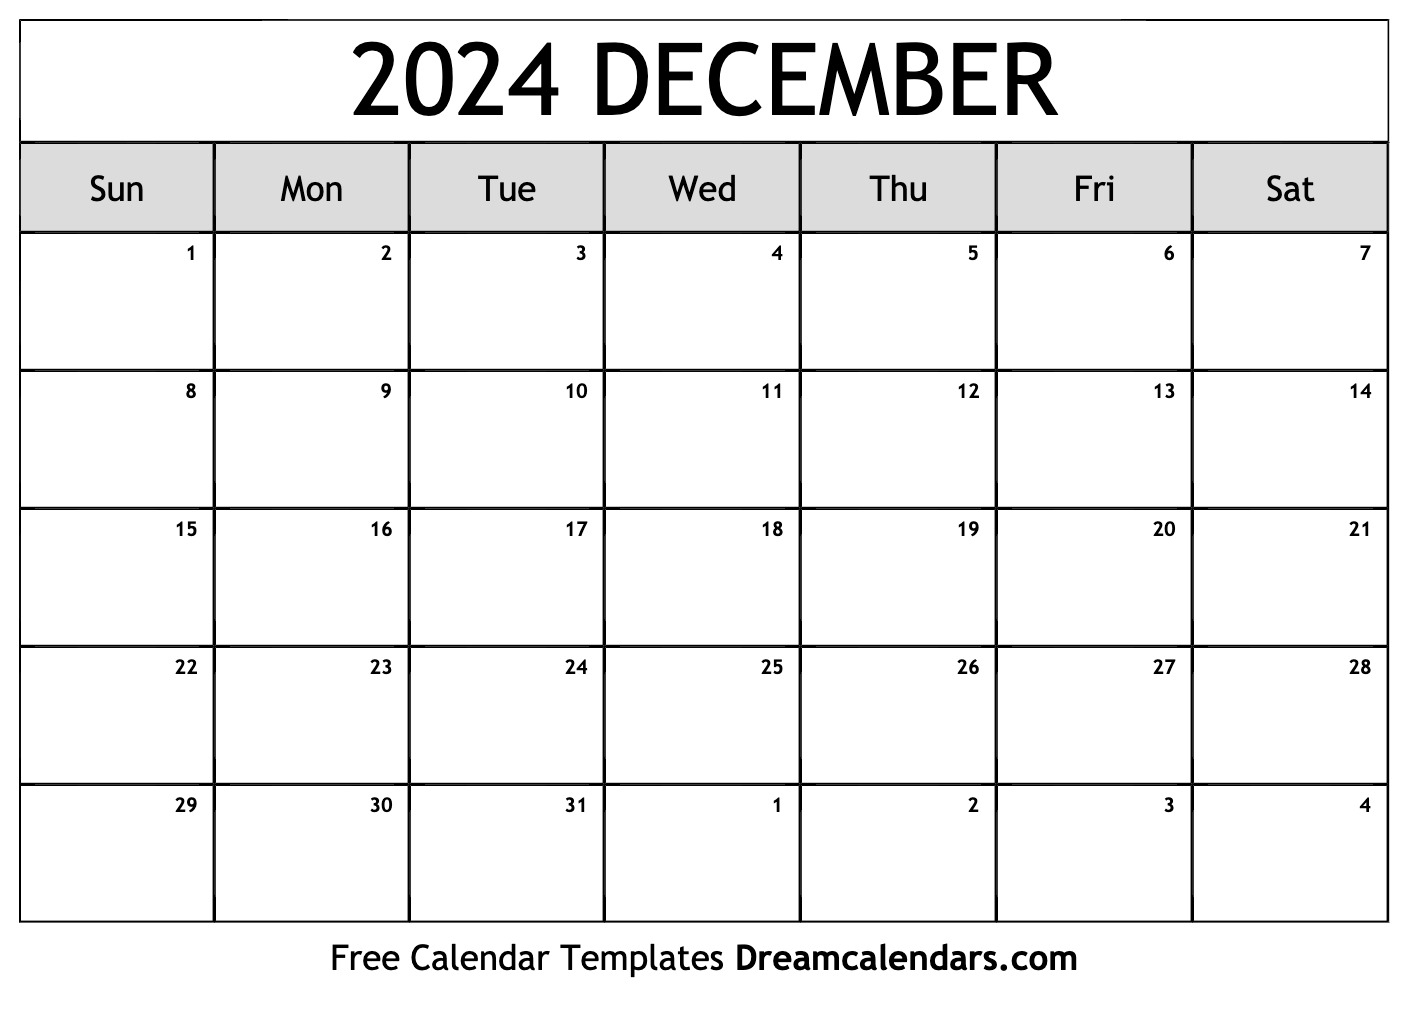 December 2024 Calendar | Free Blank Printable With Holidays for 2024 Calendar Printable December